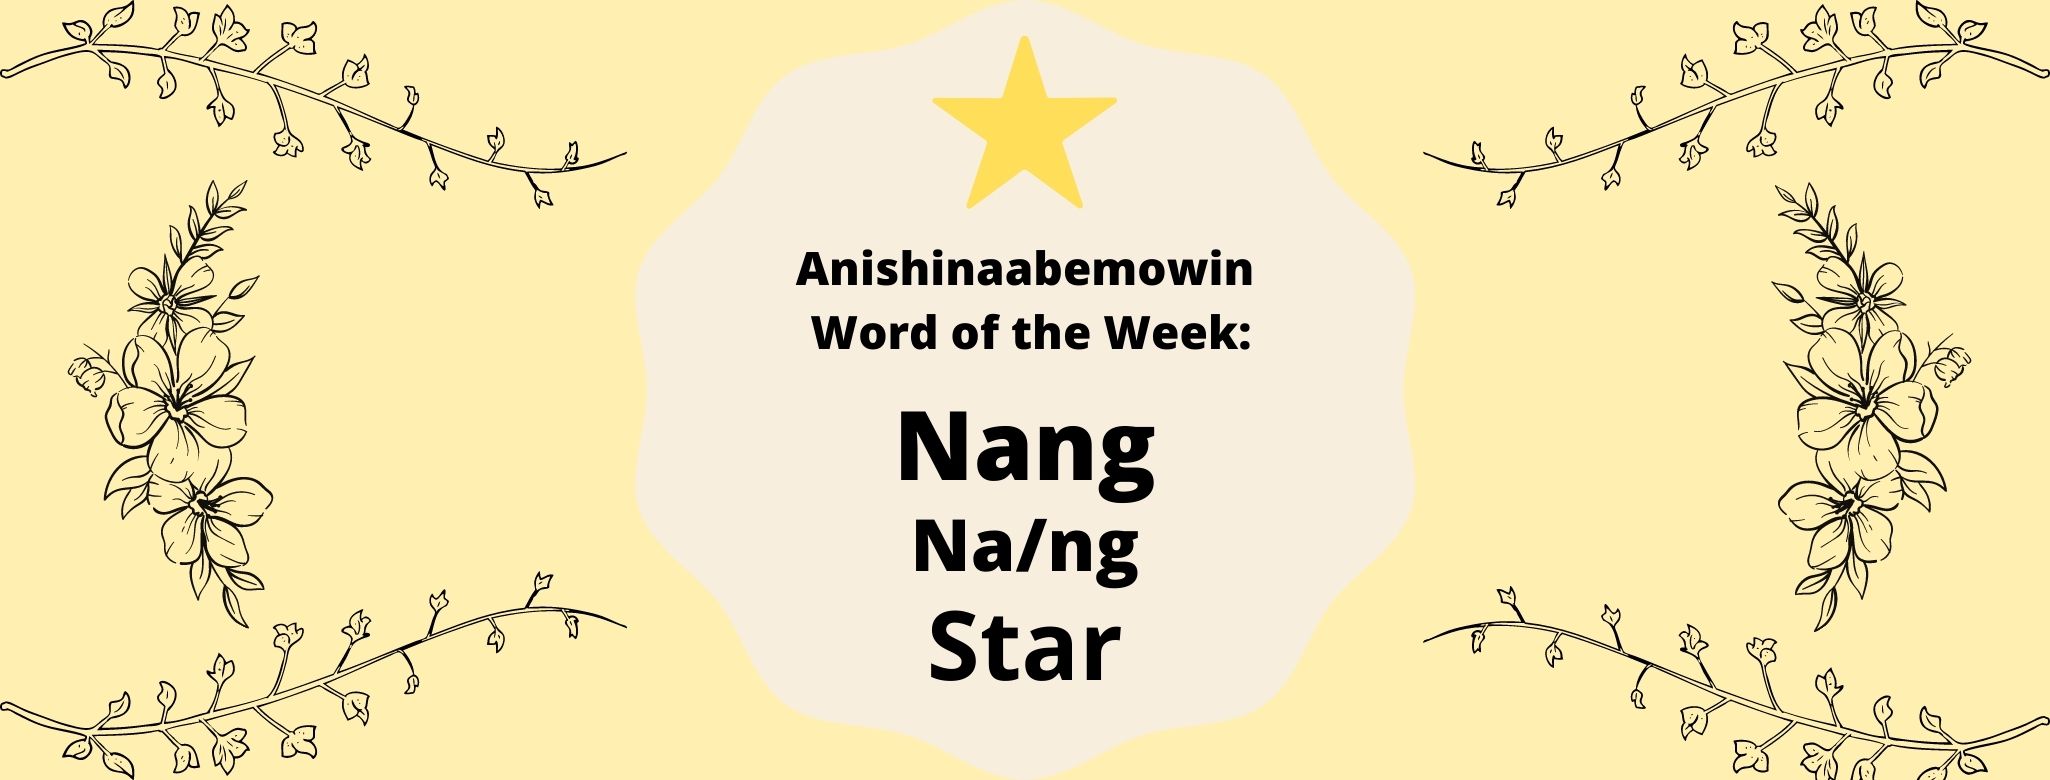 Anishinaabemowin Word of the Week Nang Nang Star